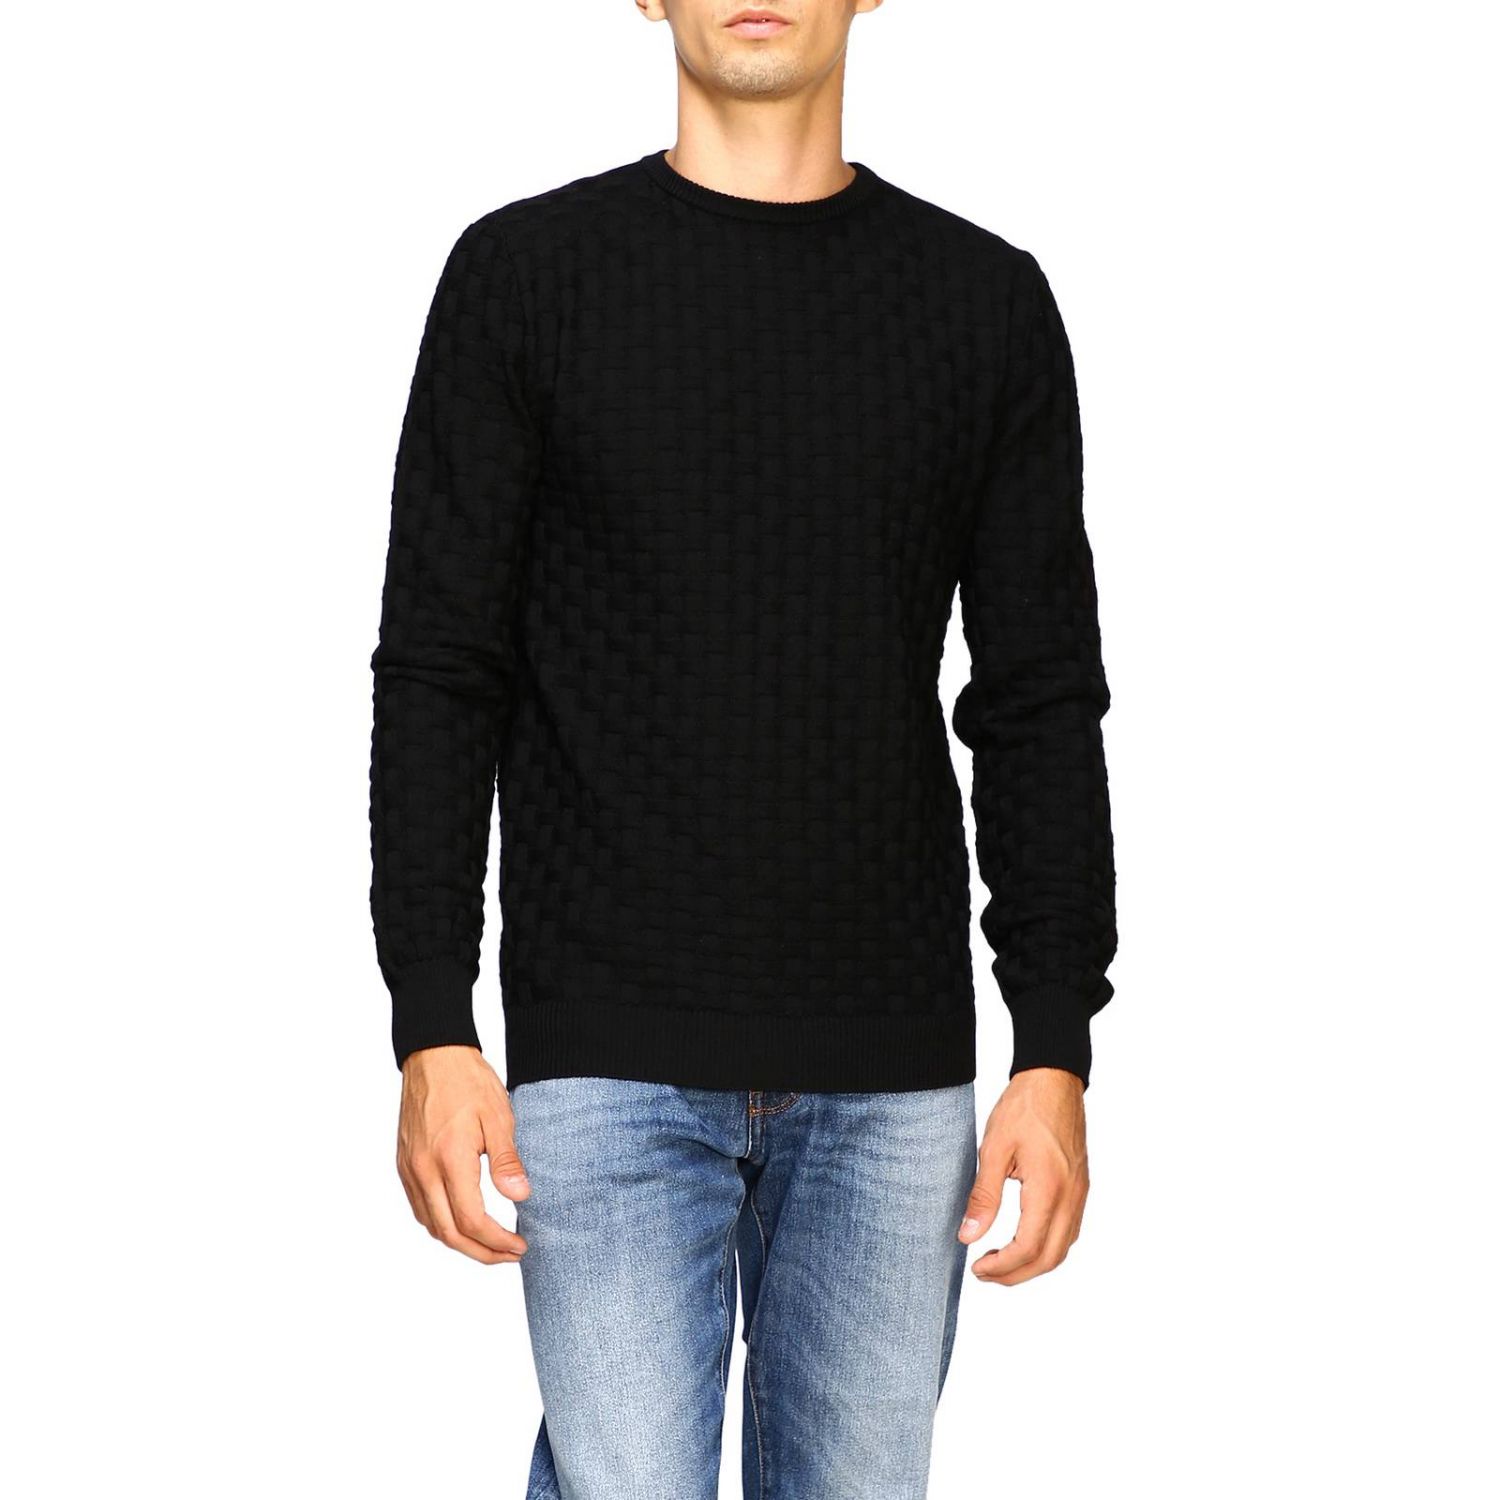 Paciotti 4Us Outlet: Sweater men | Sweater Paciotti 4Us Men Black ...